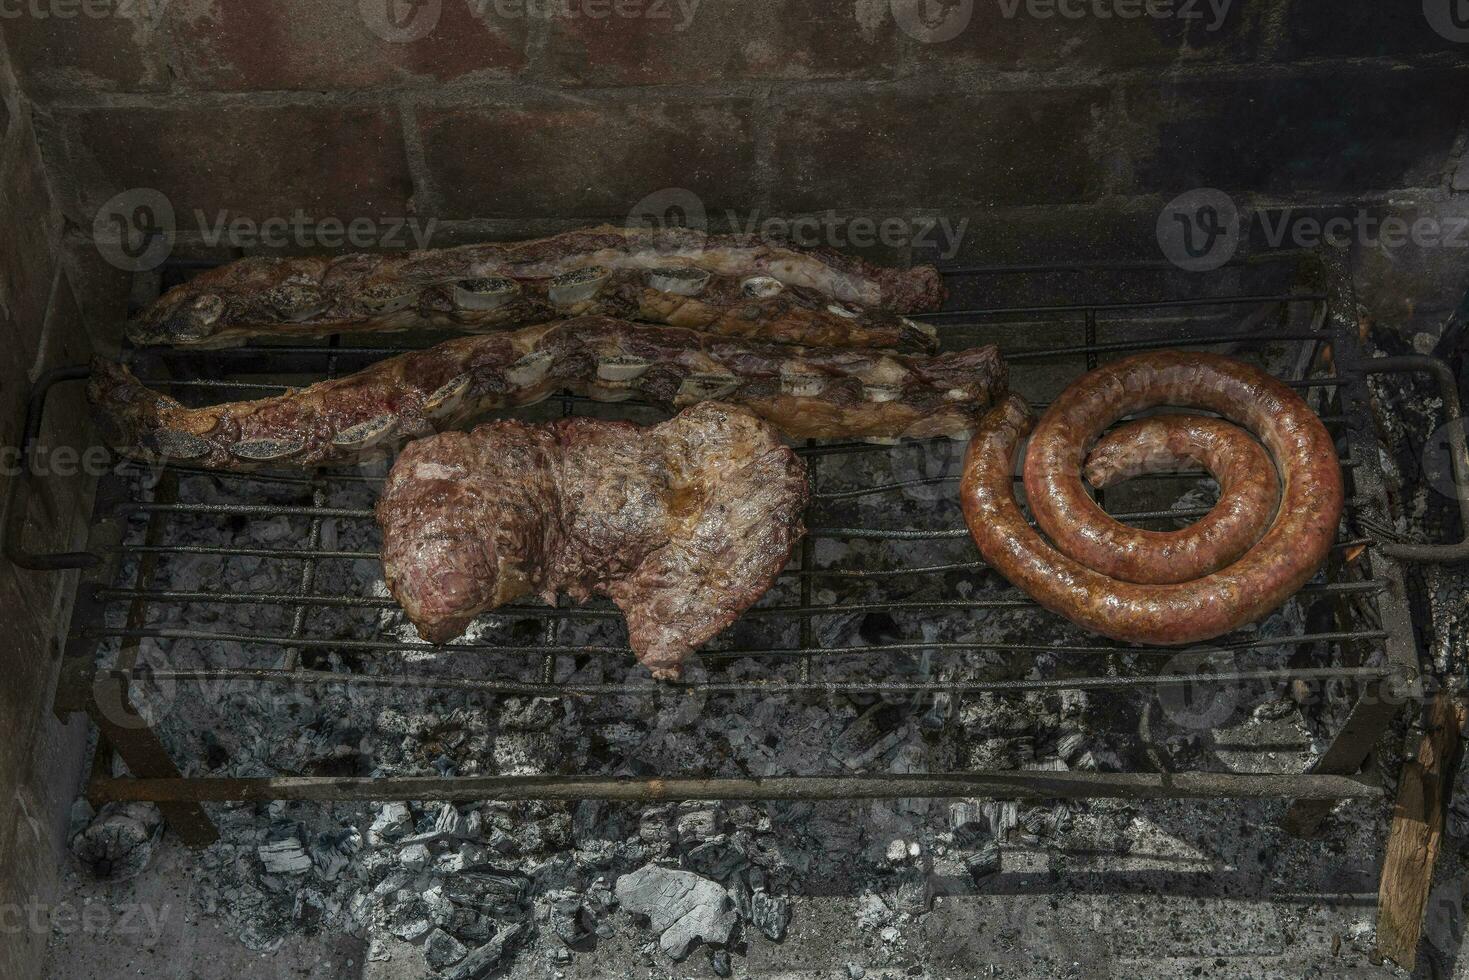 asado, tradicional alimento, argentina foto